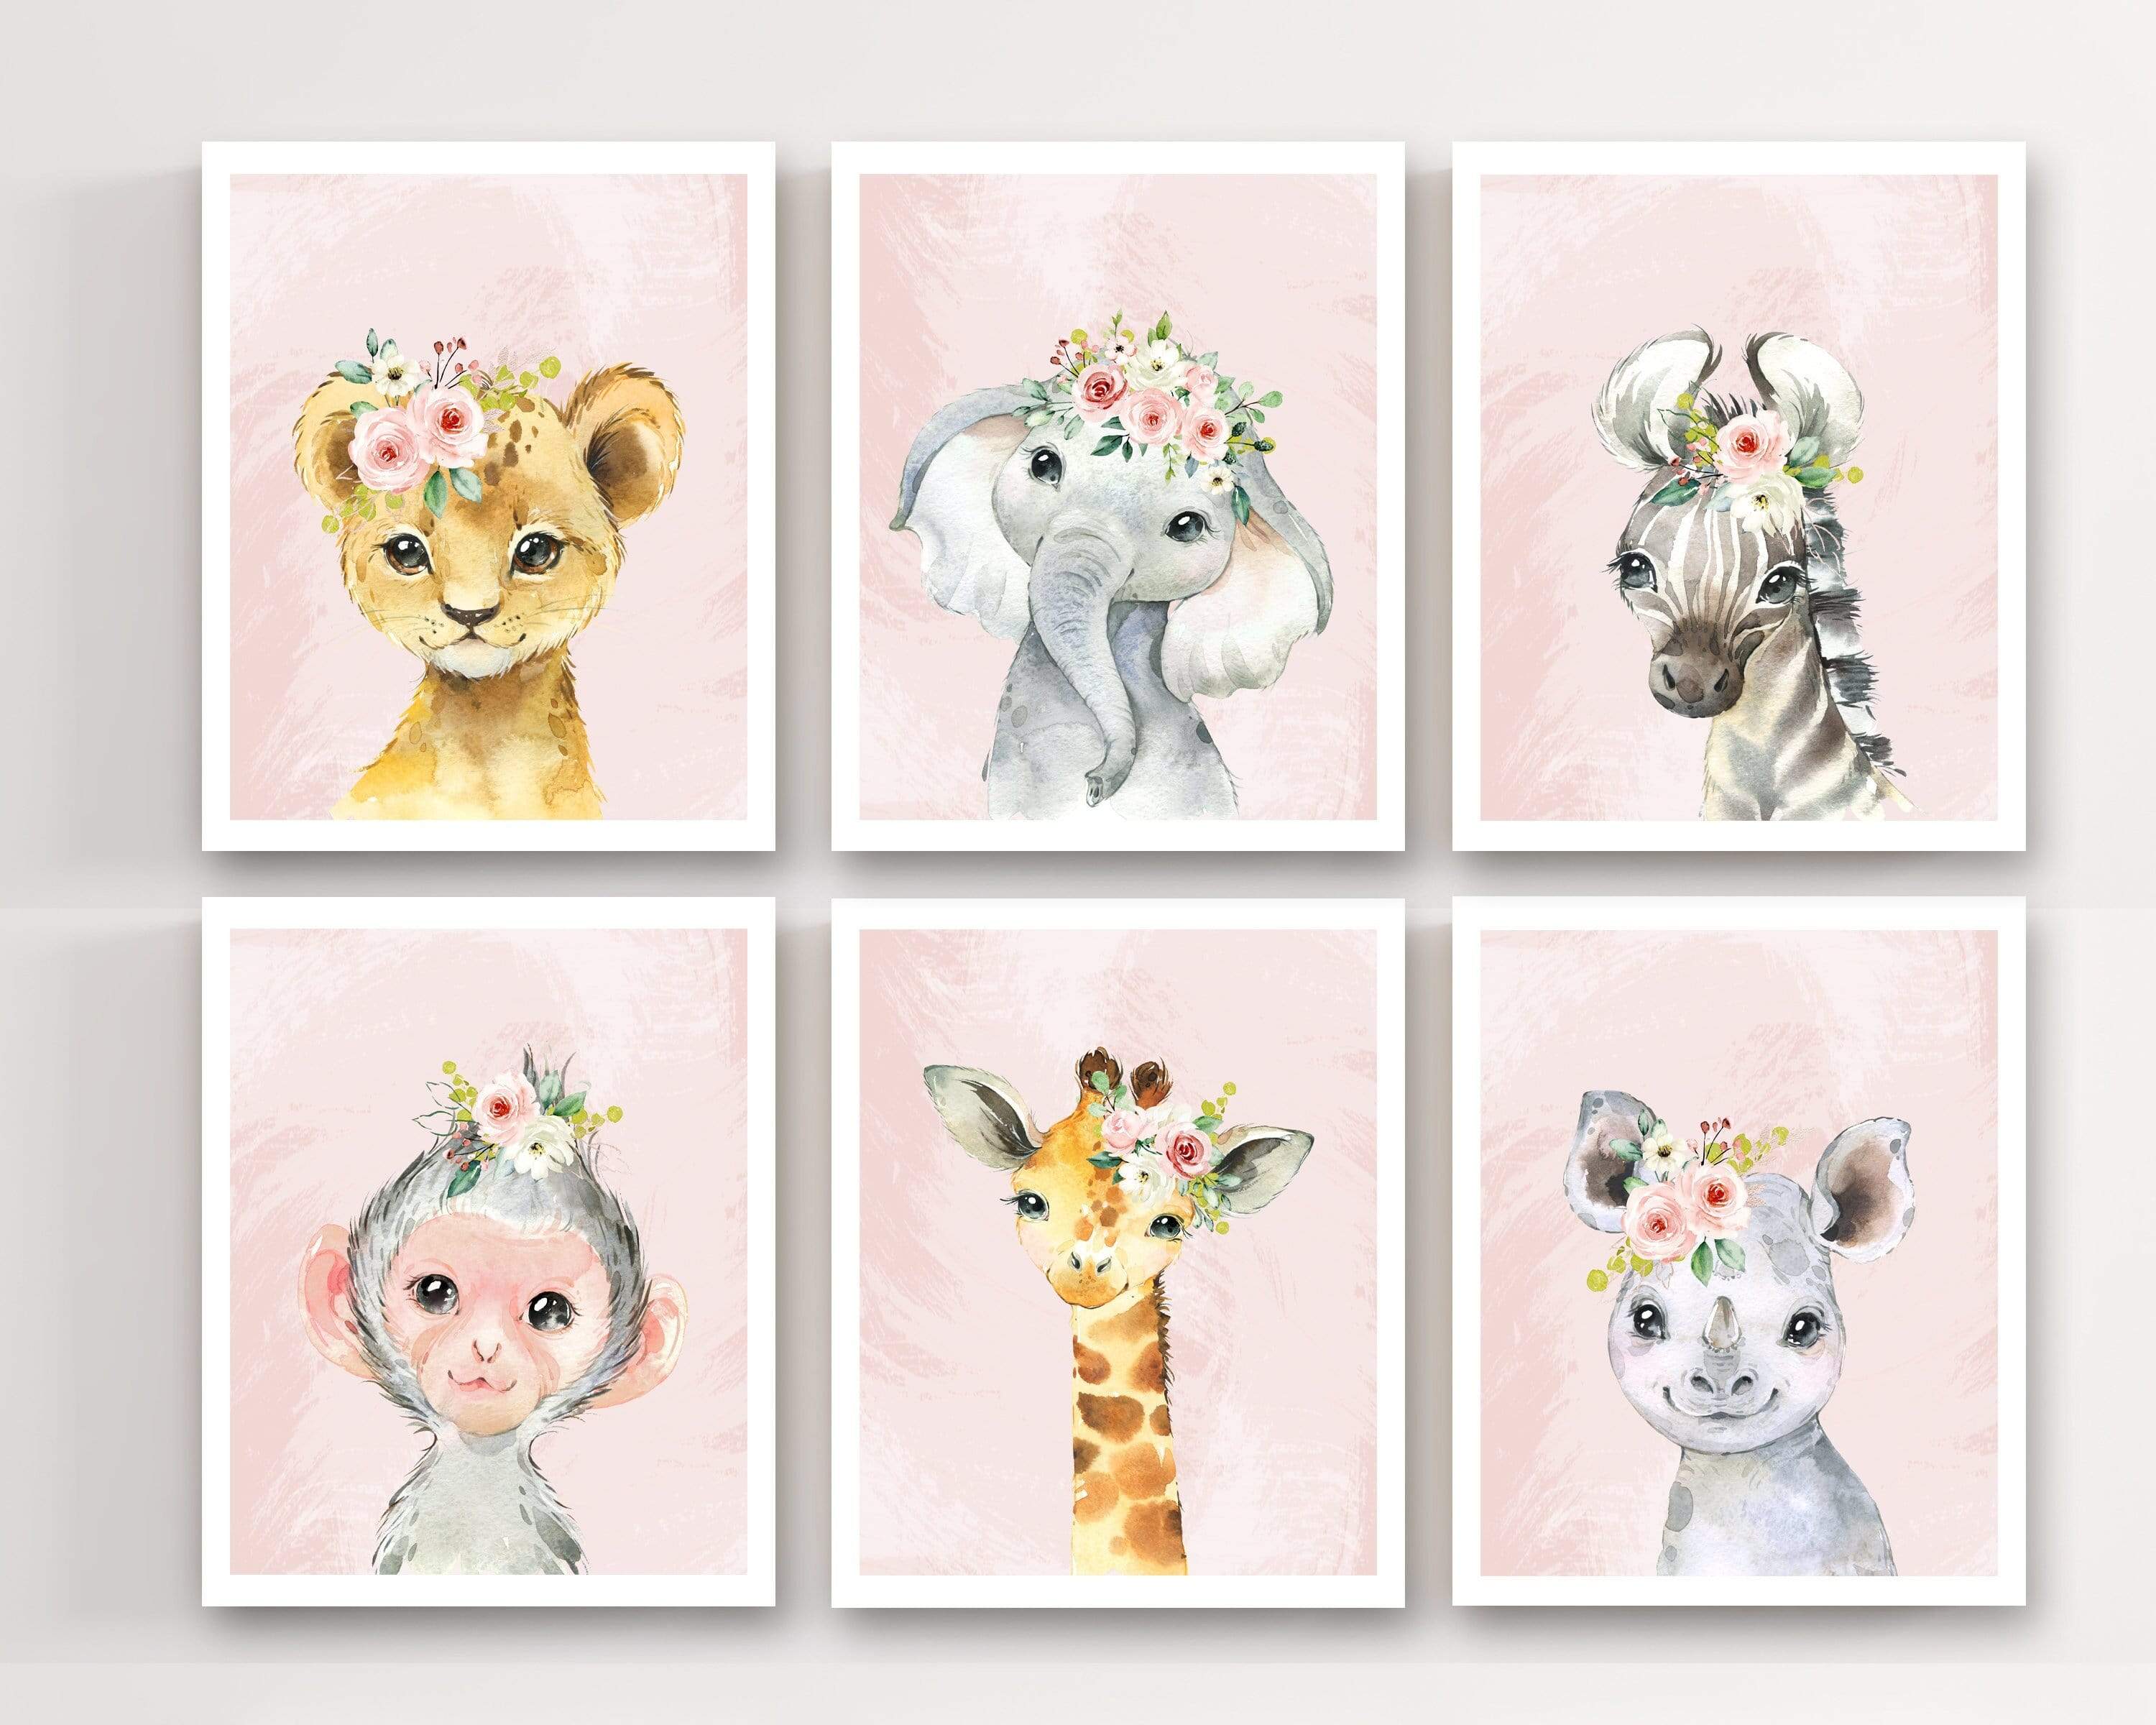 Girls nursery decor - Pink safari animal prints - Baby animal prints - Baby girl nursery wall art - Girl safari nursery decor - Pink flowers nursery art print baby nursery bedroom decor